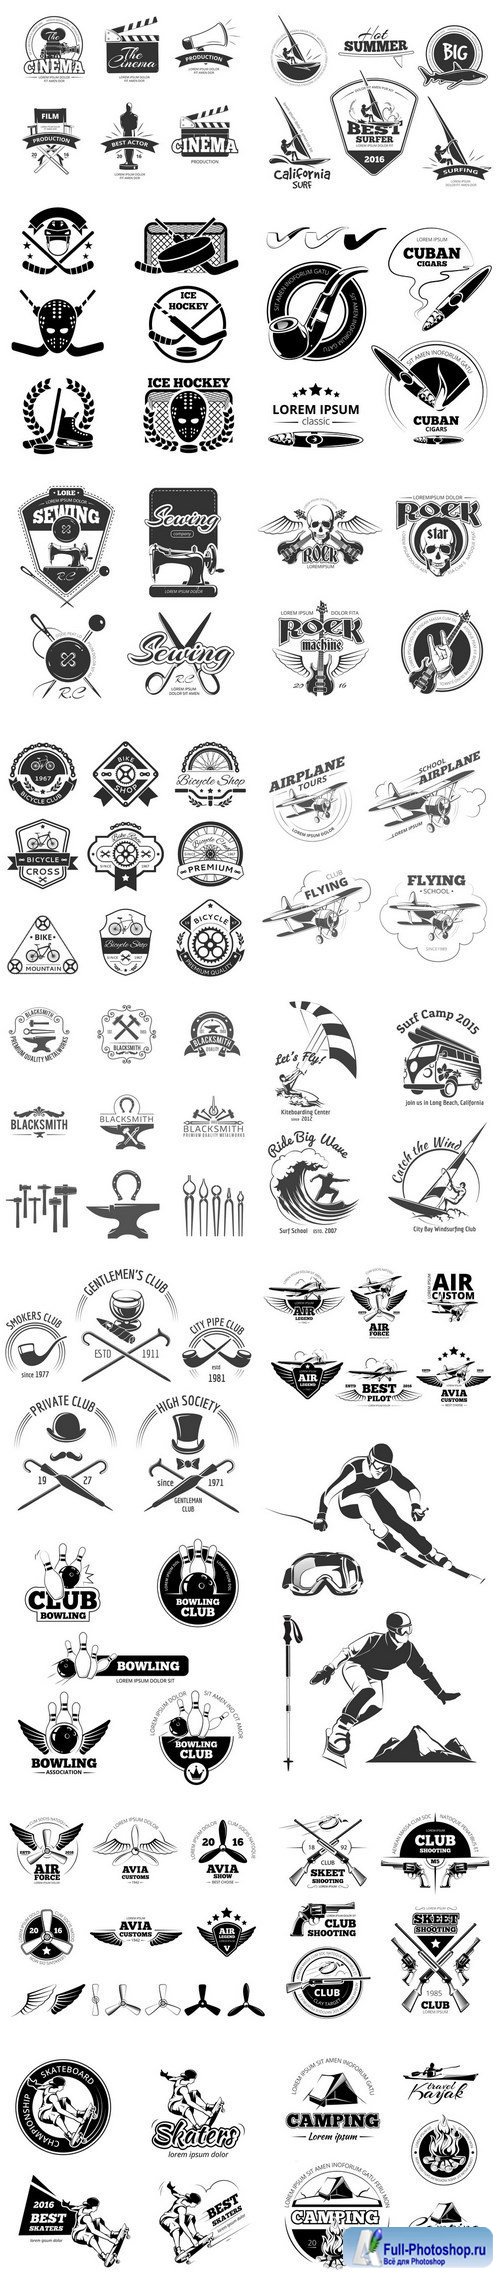 Emblem and logo set - 20xEPS